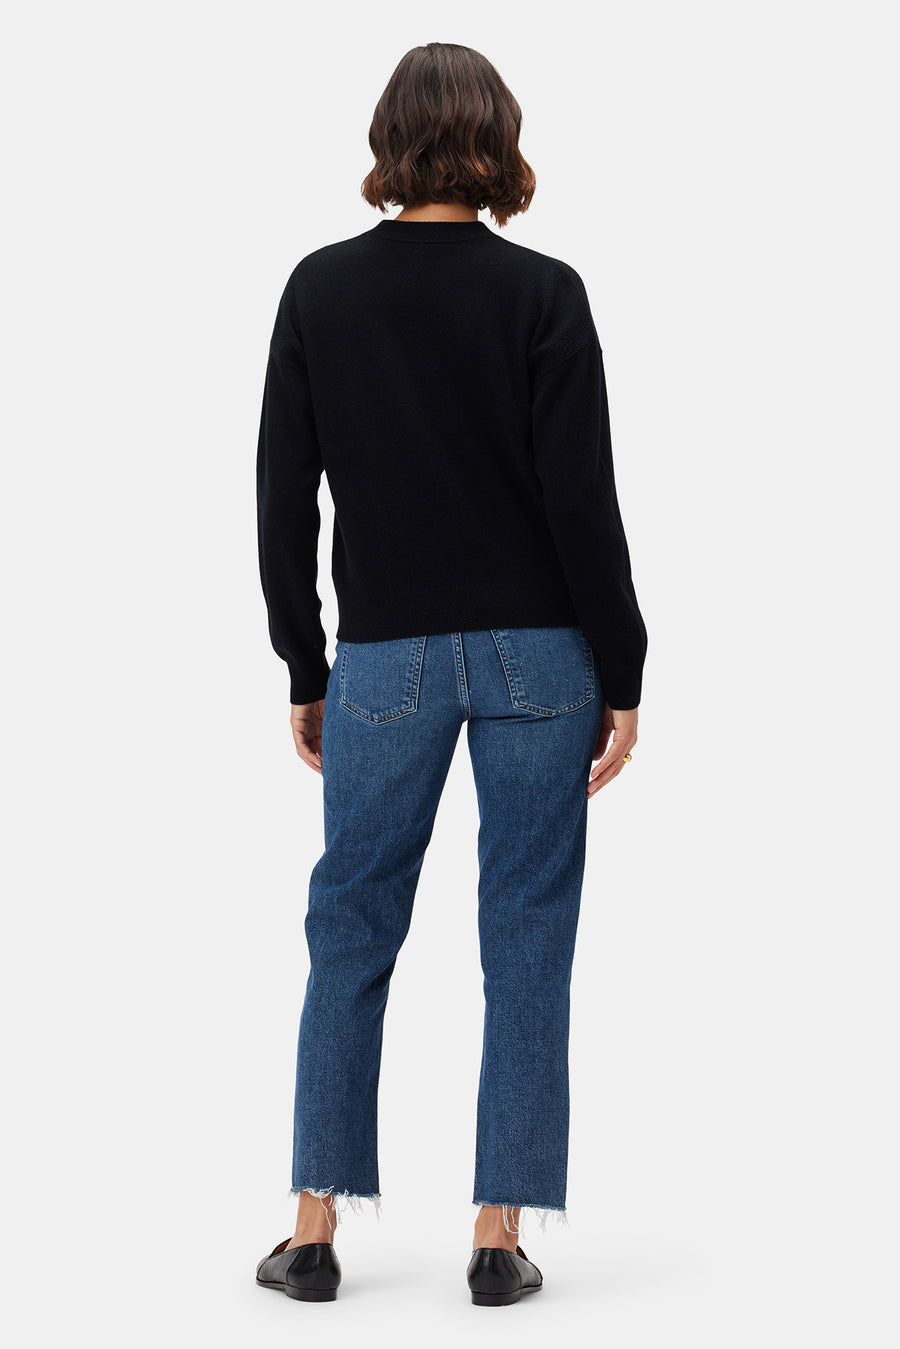 Pearl Cashmere Sweater - Licorice